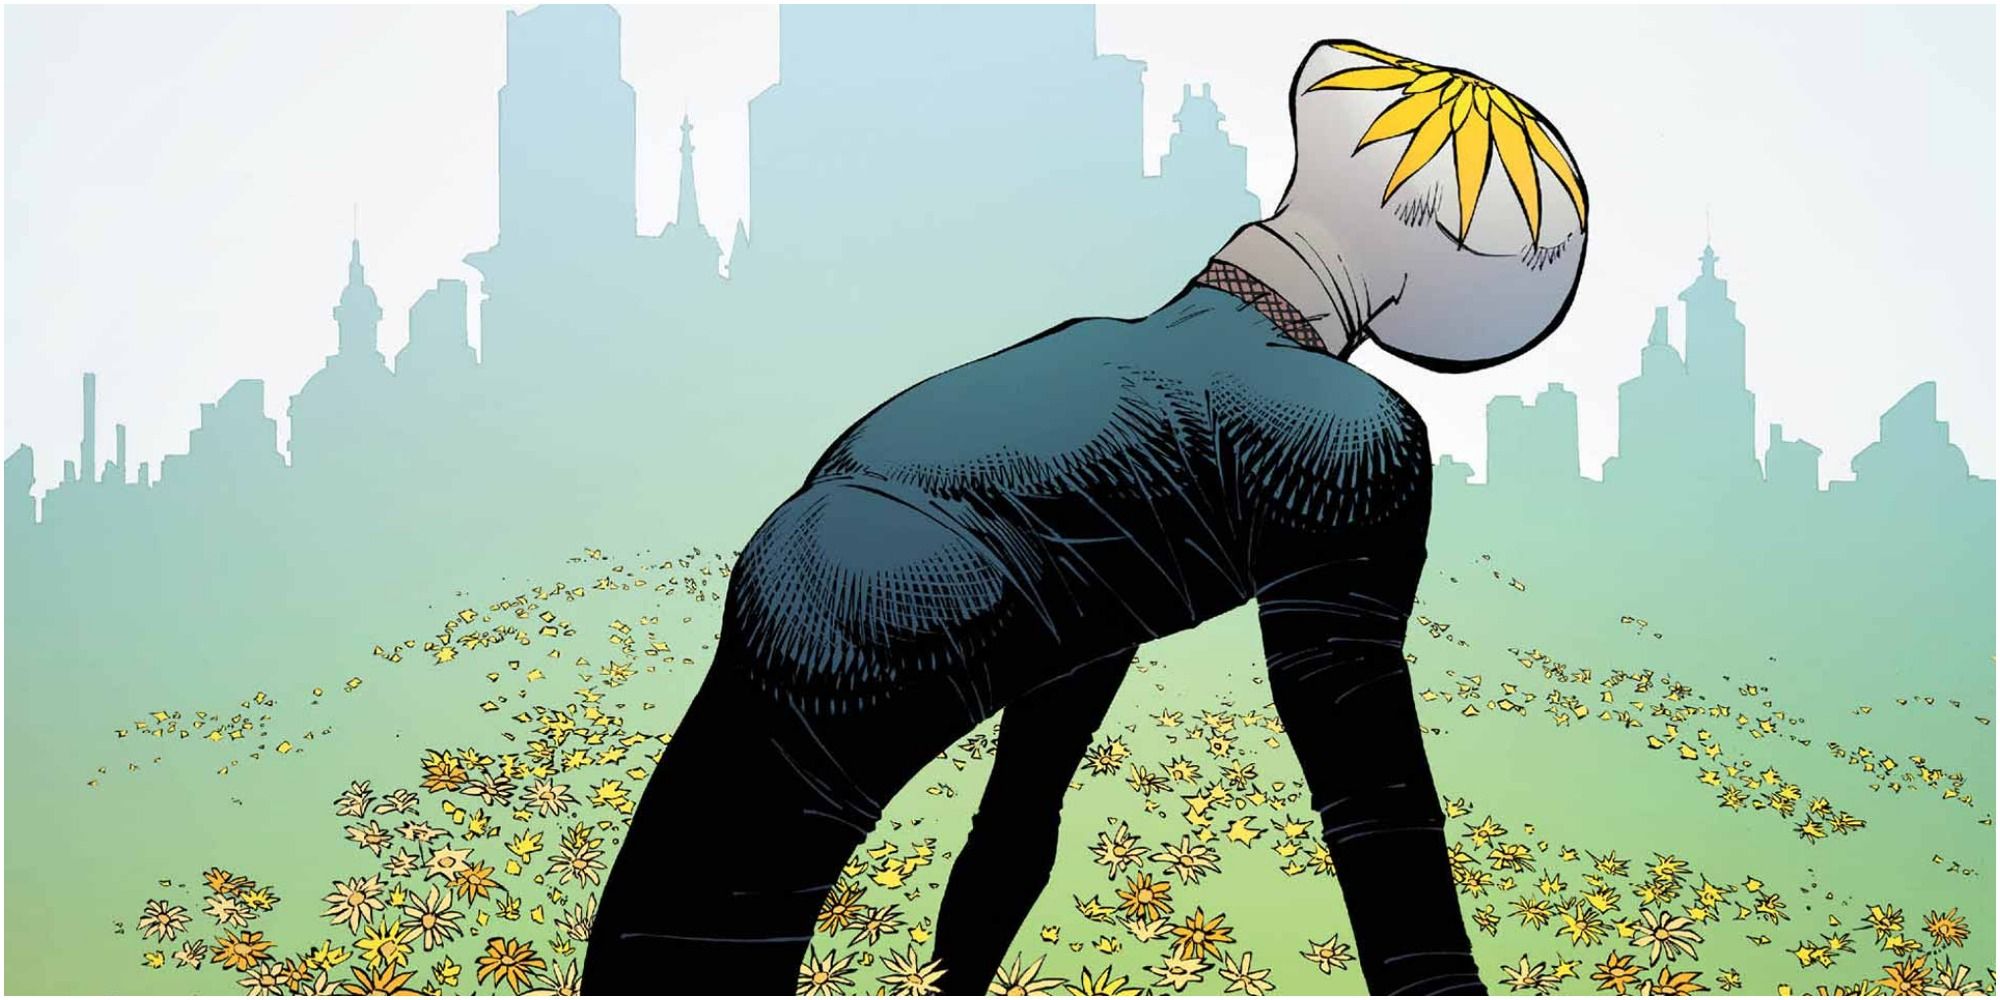 Mister Bloom rises in a Gotham City garden